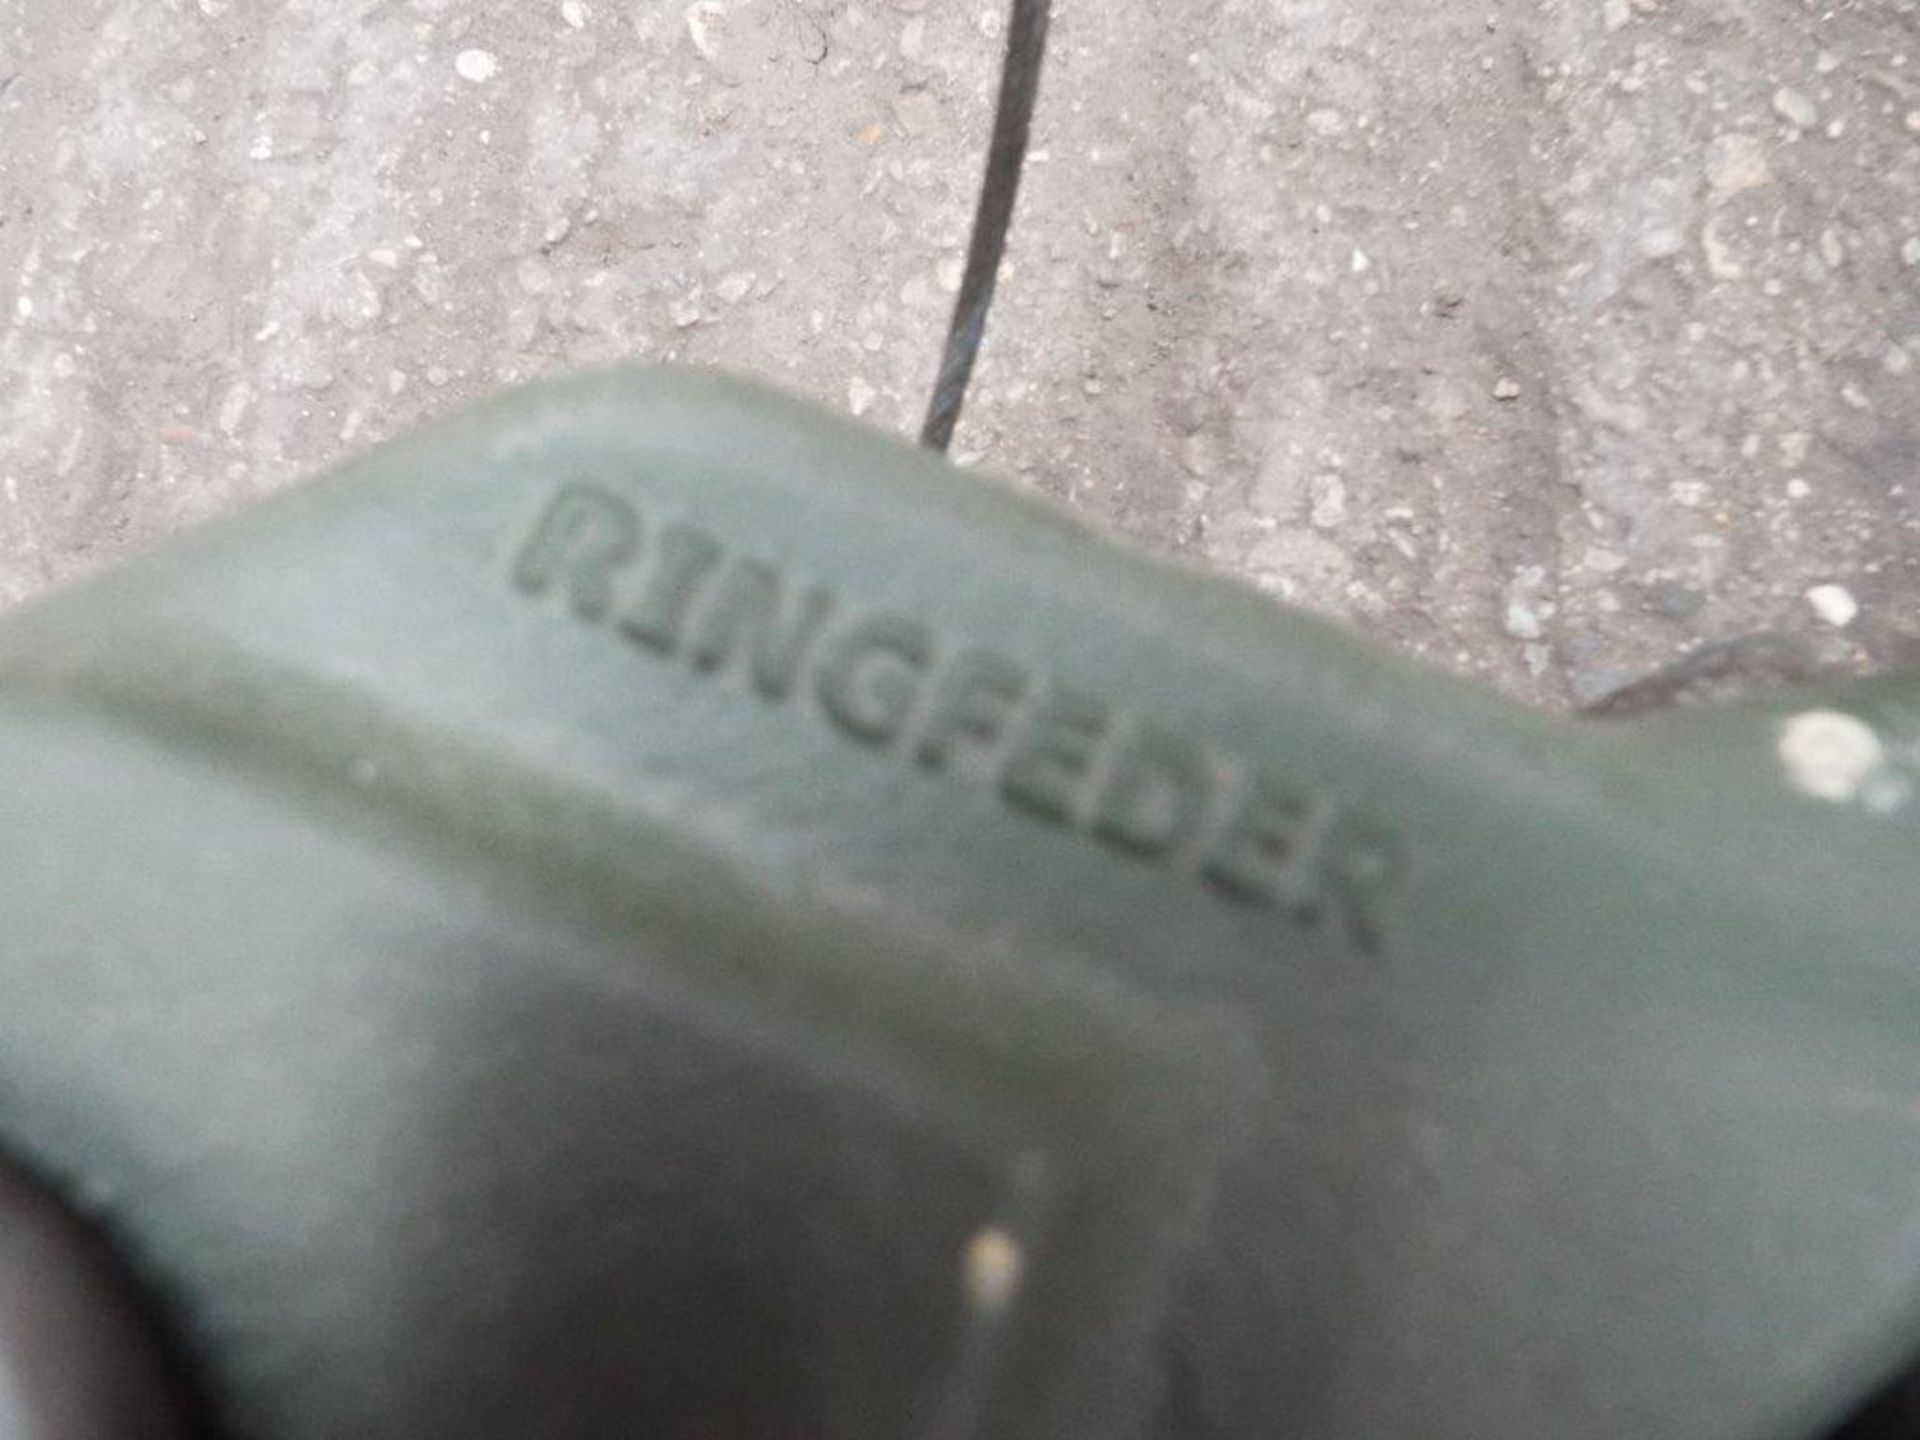 Ringfeder Heavy Duty Nato Tow Pintle - Image 2 of 5